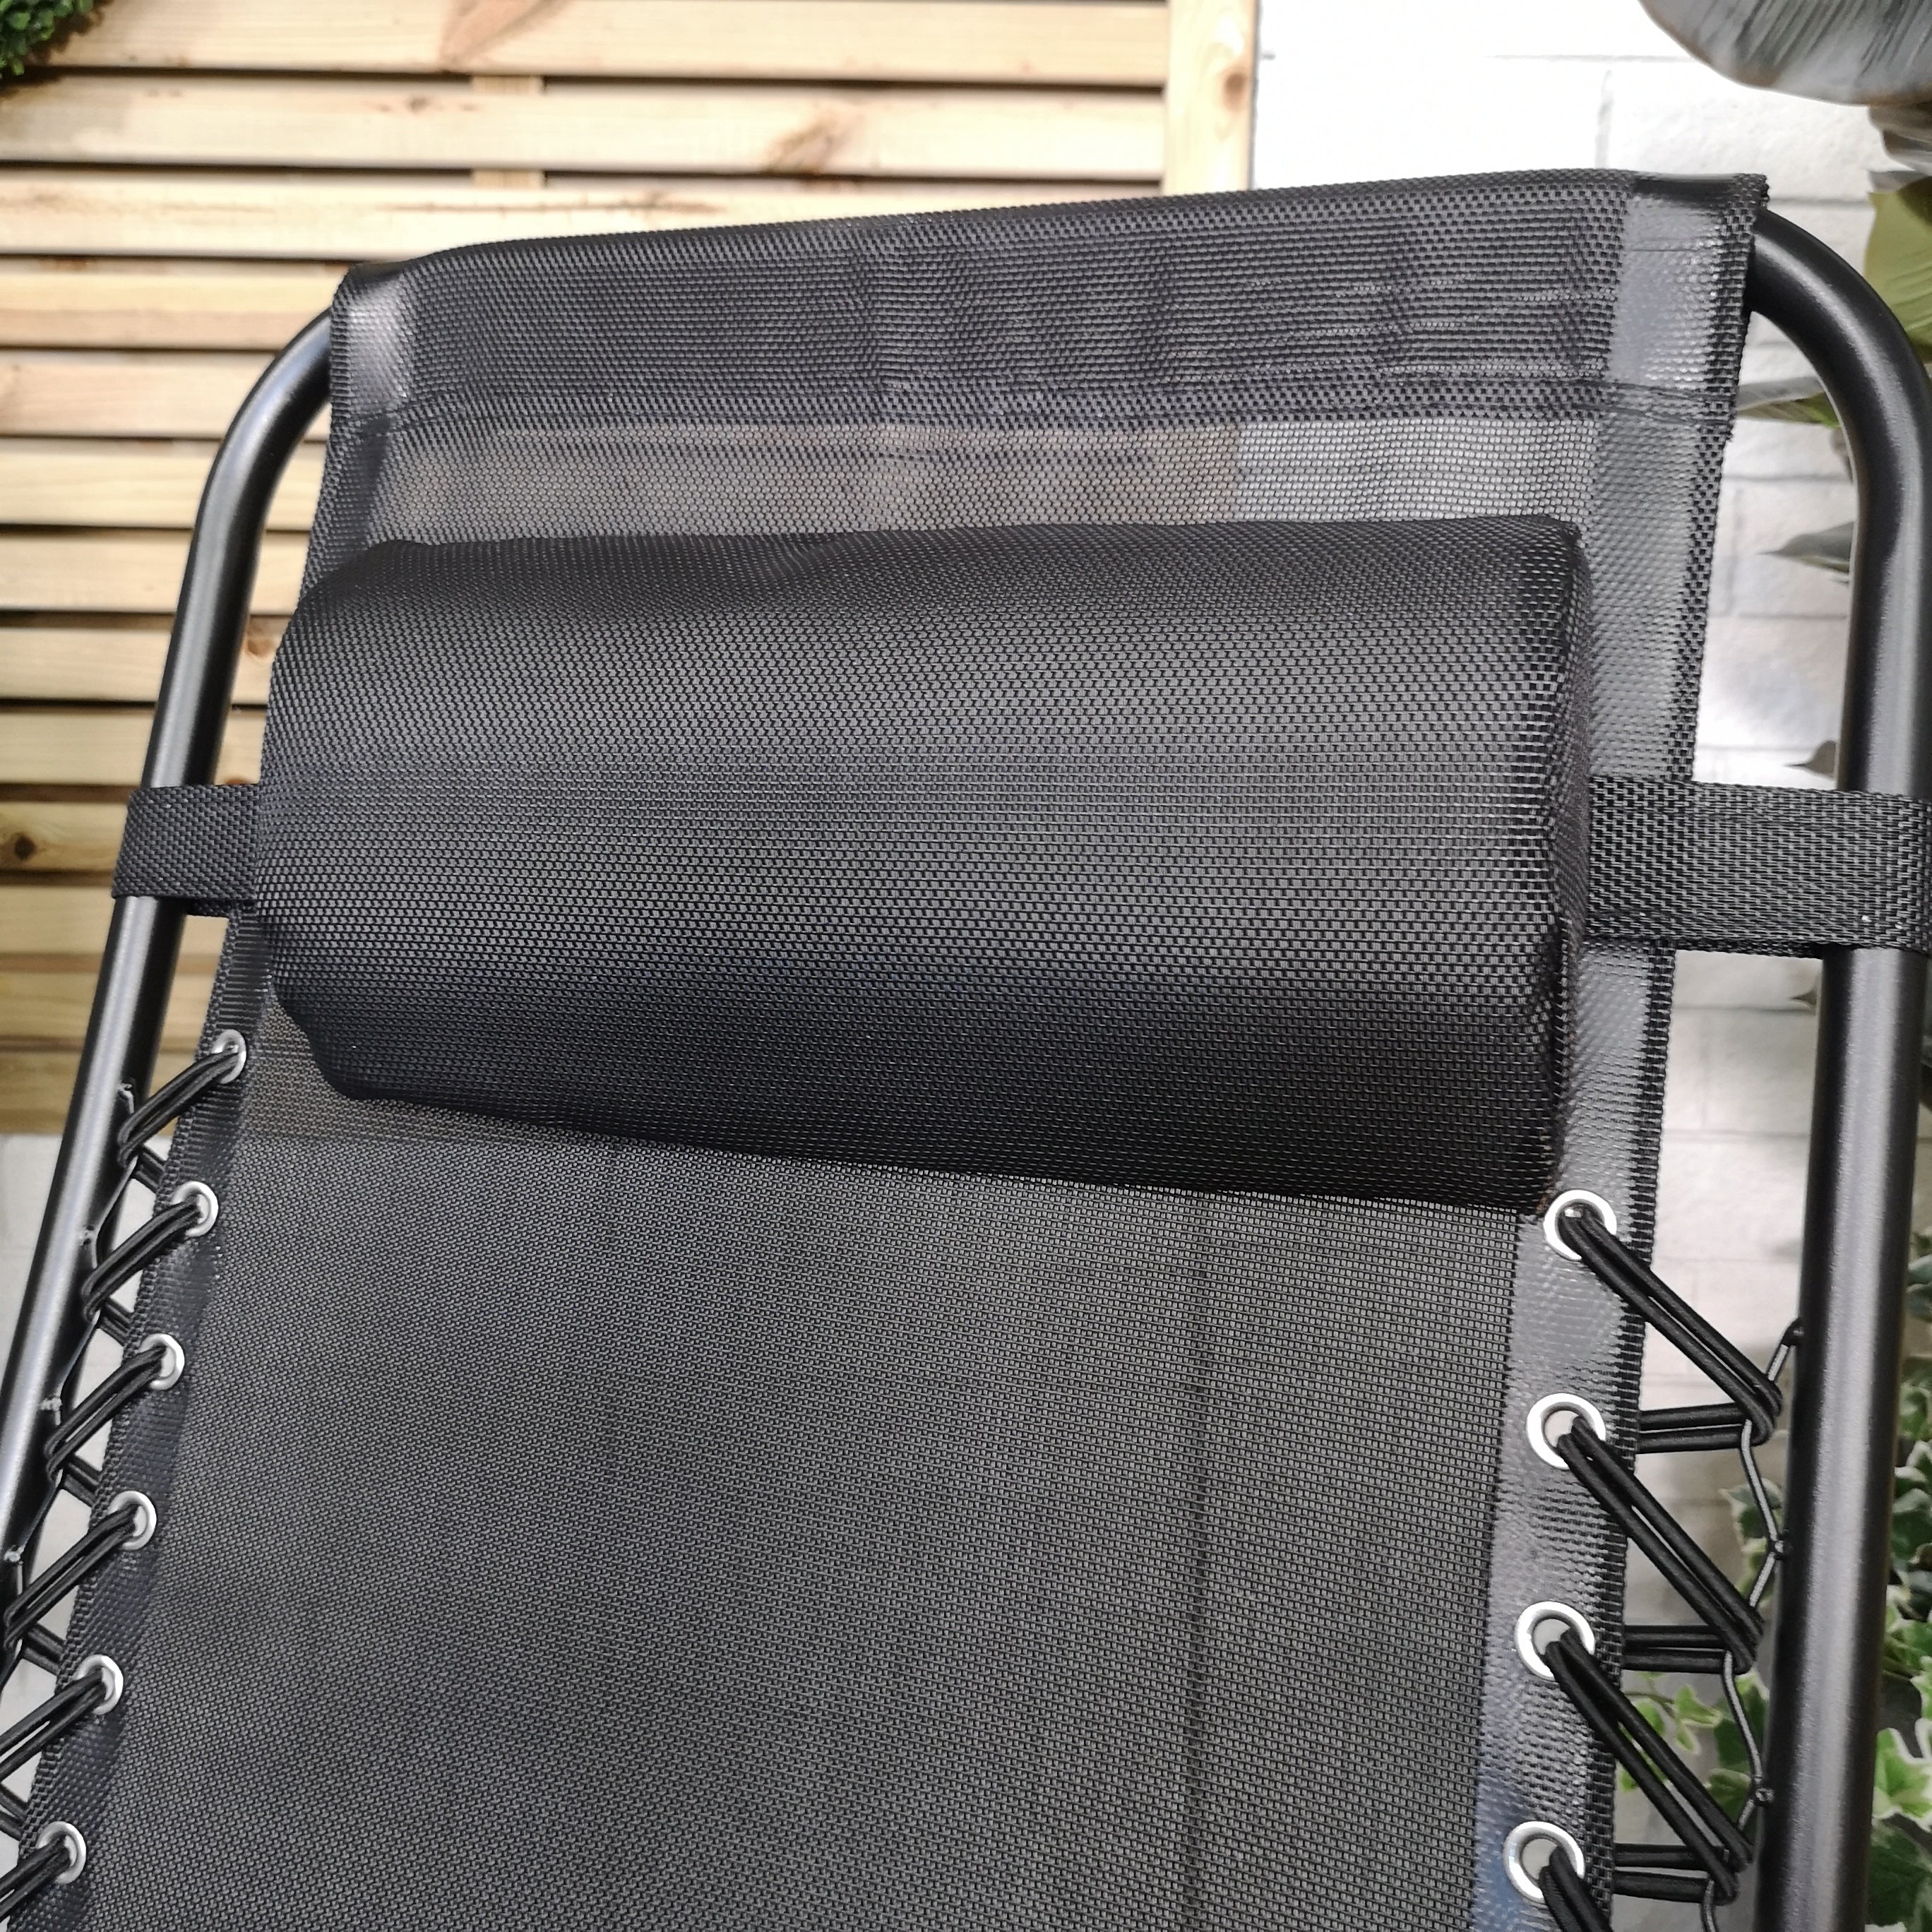 Black Multi Position Textoline Zero Gravity Garden Relaxer Chair Lounger